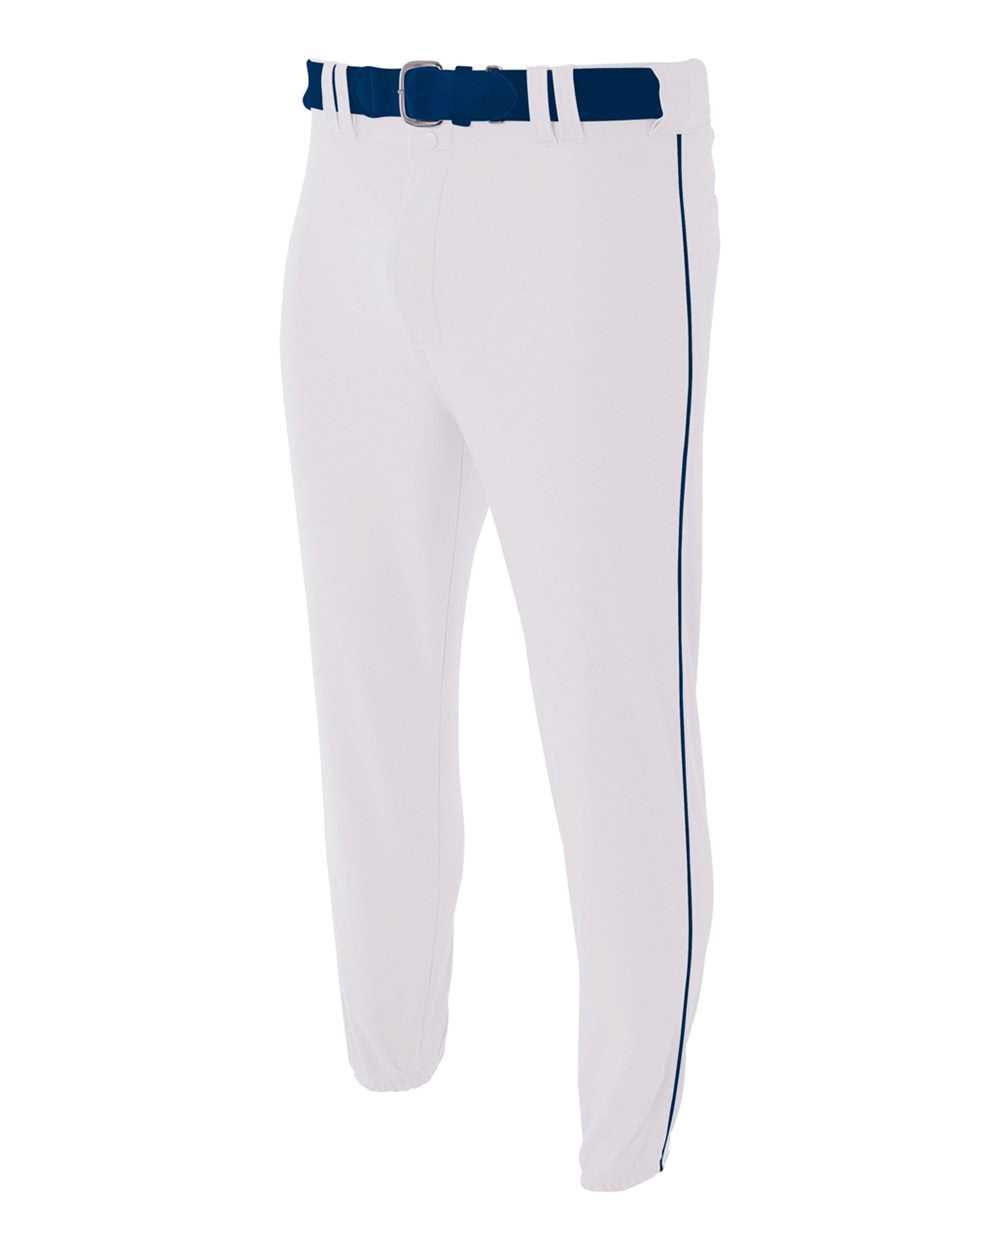 A4 N6178 Pro Style Elastic Bottom Baseball Pant - White Navy - HIT a Double